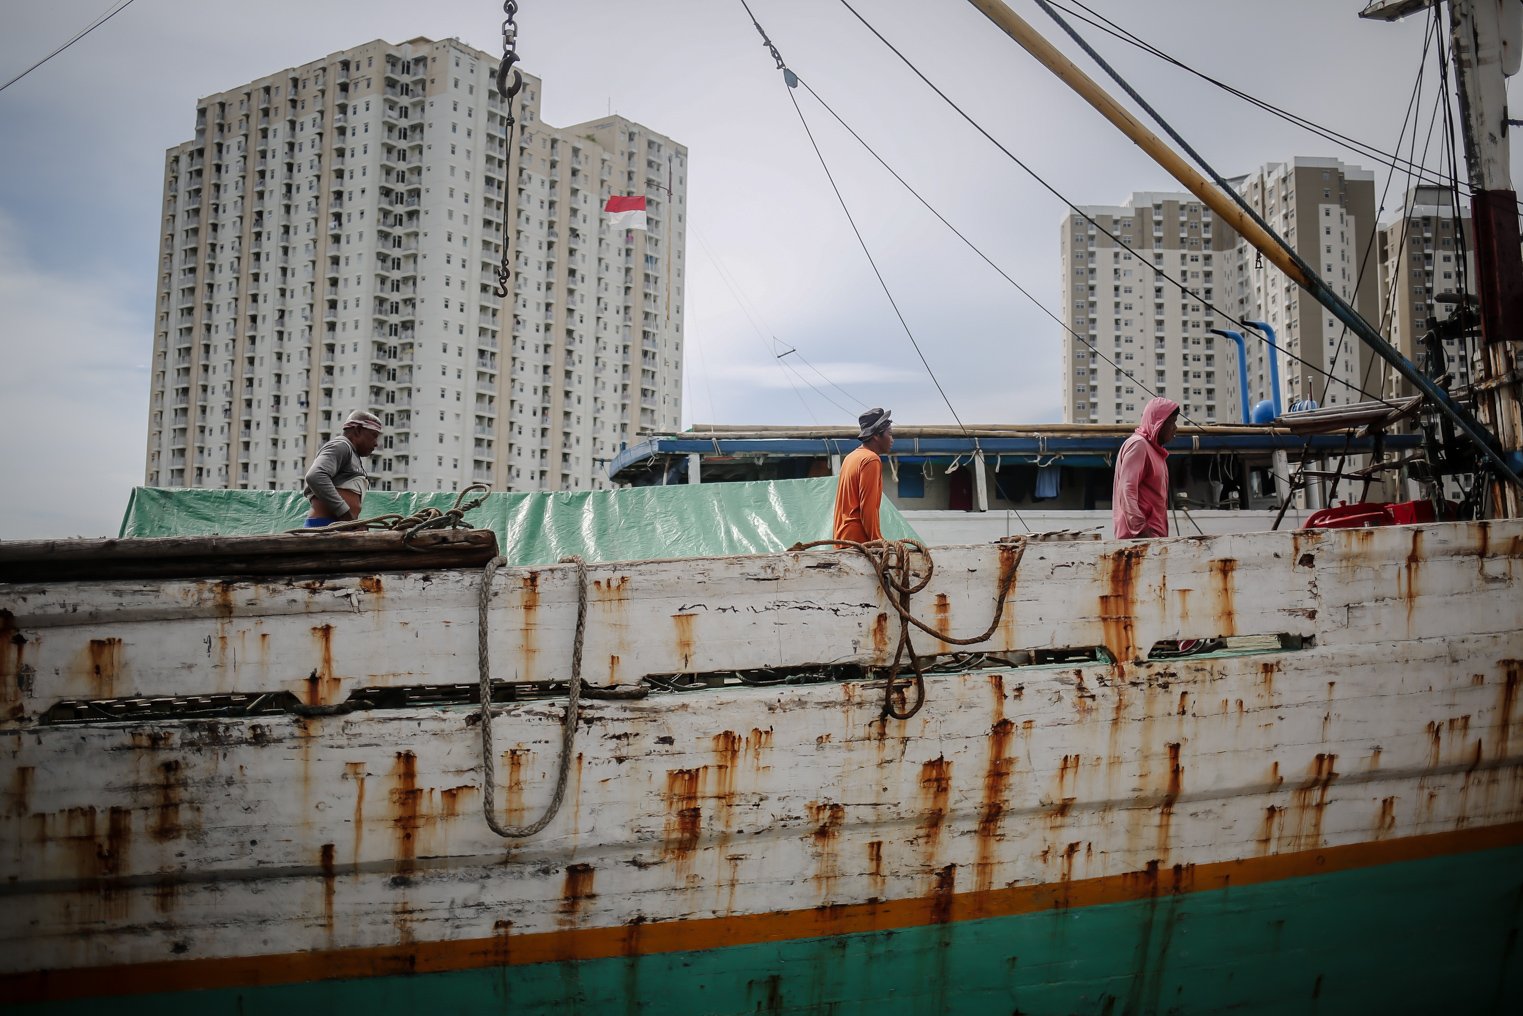 Buruh pengangkut mnunggu muatan barang logistik ke kapal di Pelabuhan Sunda Kelapa, Jakarta, Senin (7/2/2022). Badan Pusat Statistik (BPS) mencatat pertumbuhan ekonomi 2021 mencapai 3,69%, lebih baik dibandingkan tahun 2020 yang mengalami kontraksi 2,07%. Namun, angka ini berada di bawah proyeksi Menteri Keuangan Sri Mulyani sebesar 4%.